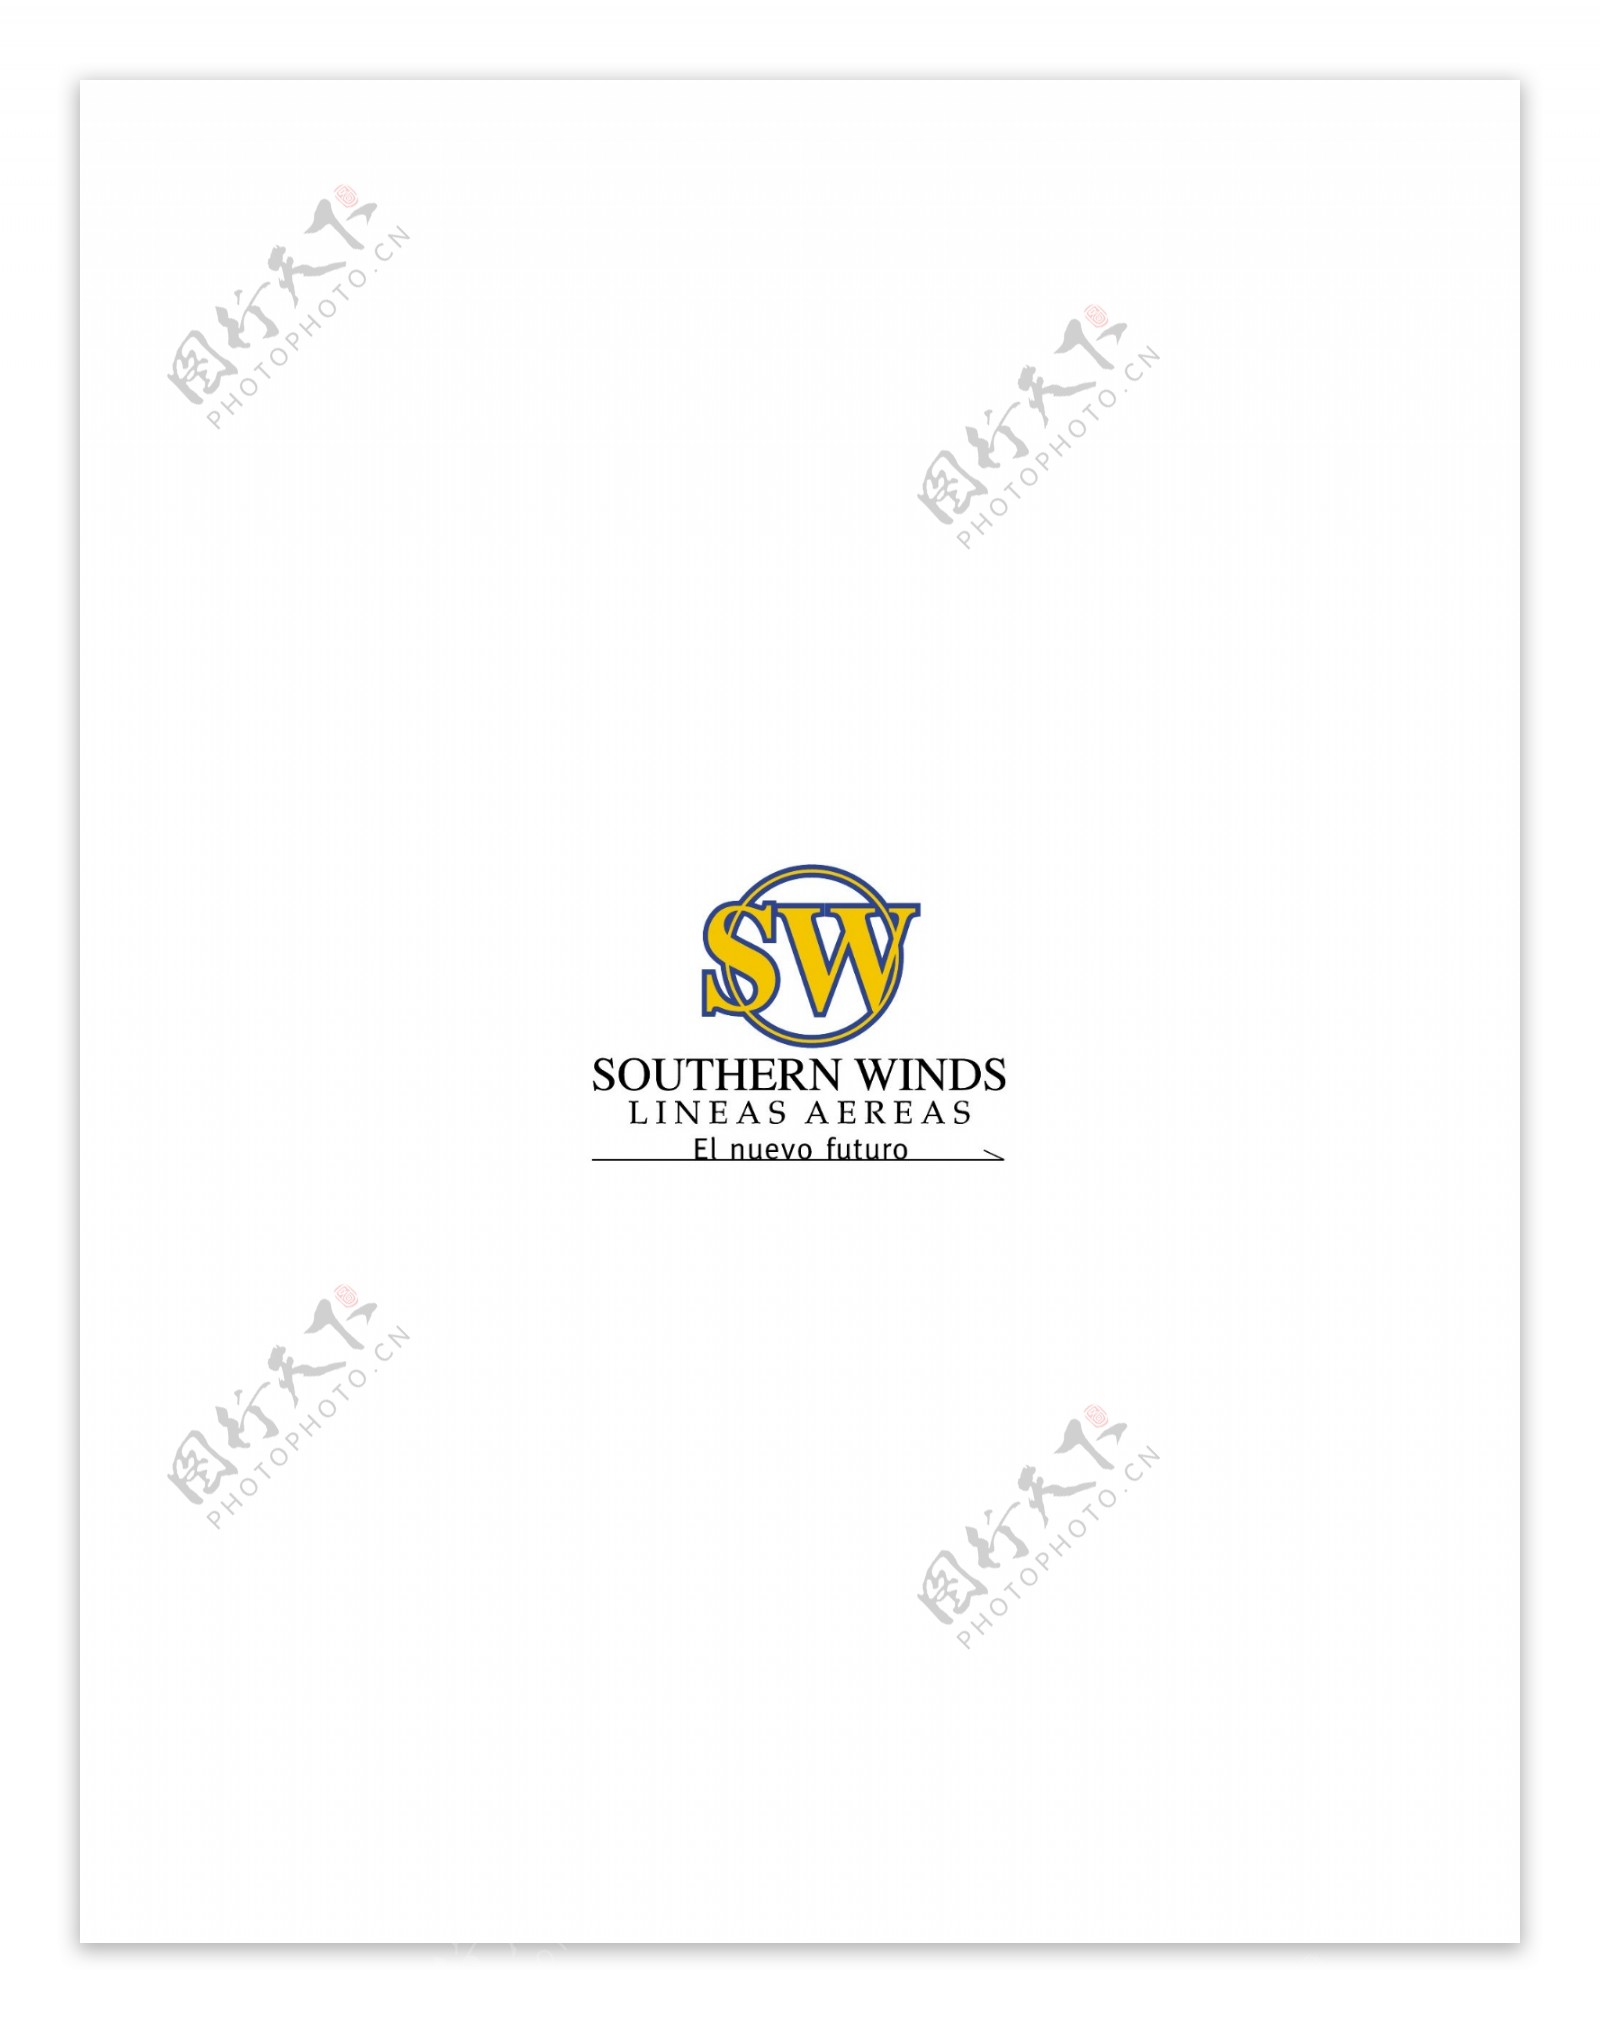 SouthermWindslogo设计欣赏SouthermWinds航空标志下载标志设计欣赏